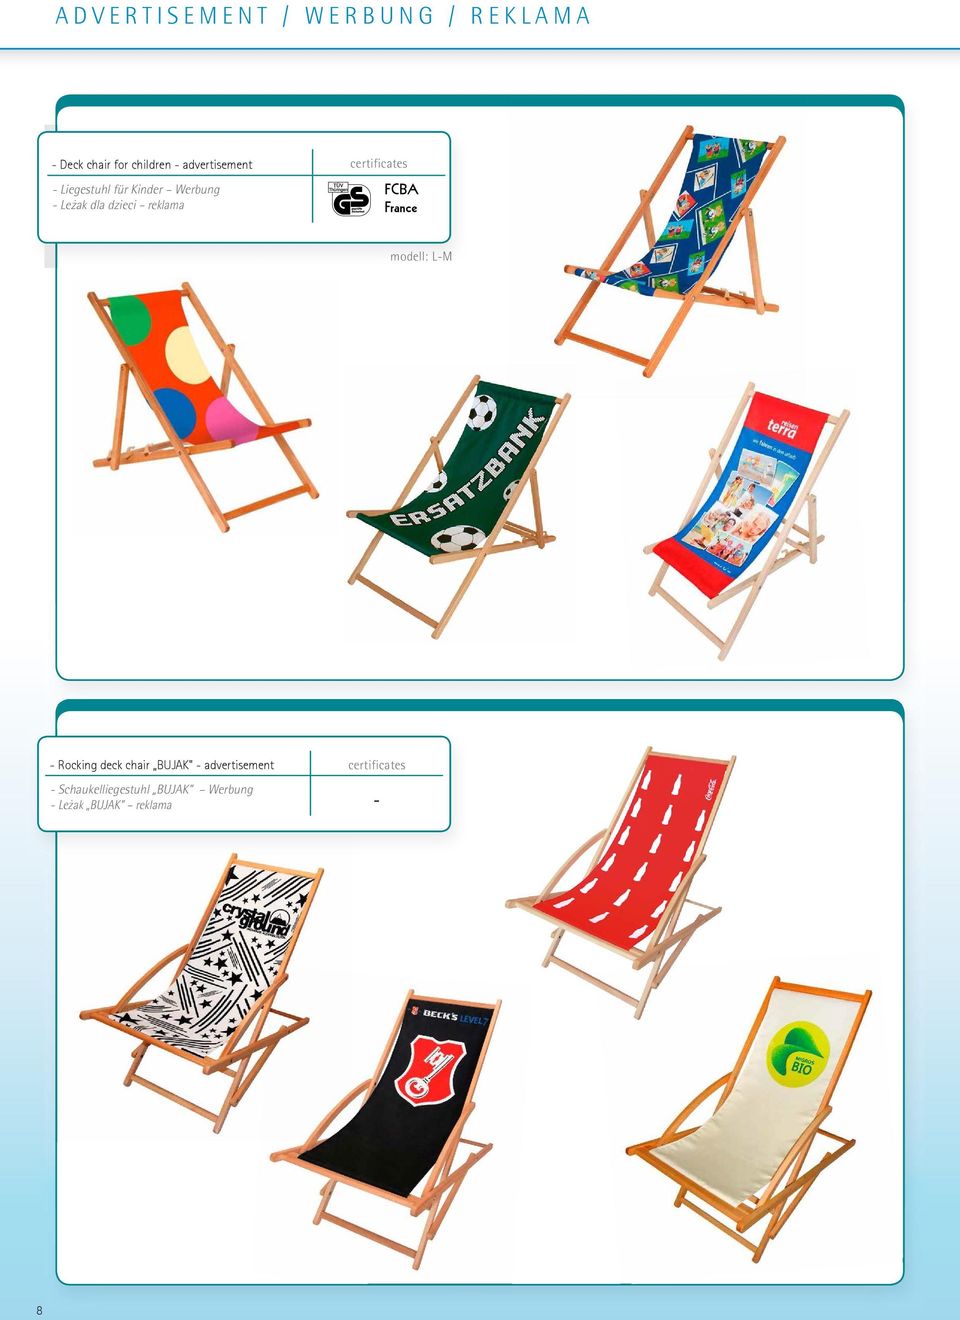 dzieci reklama FCBA France modell: L-M - Rocking deck chair BUJAK" -